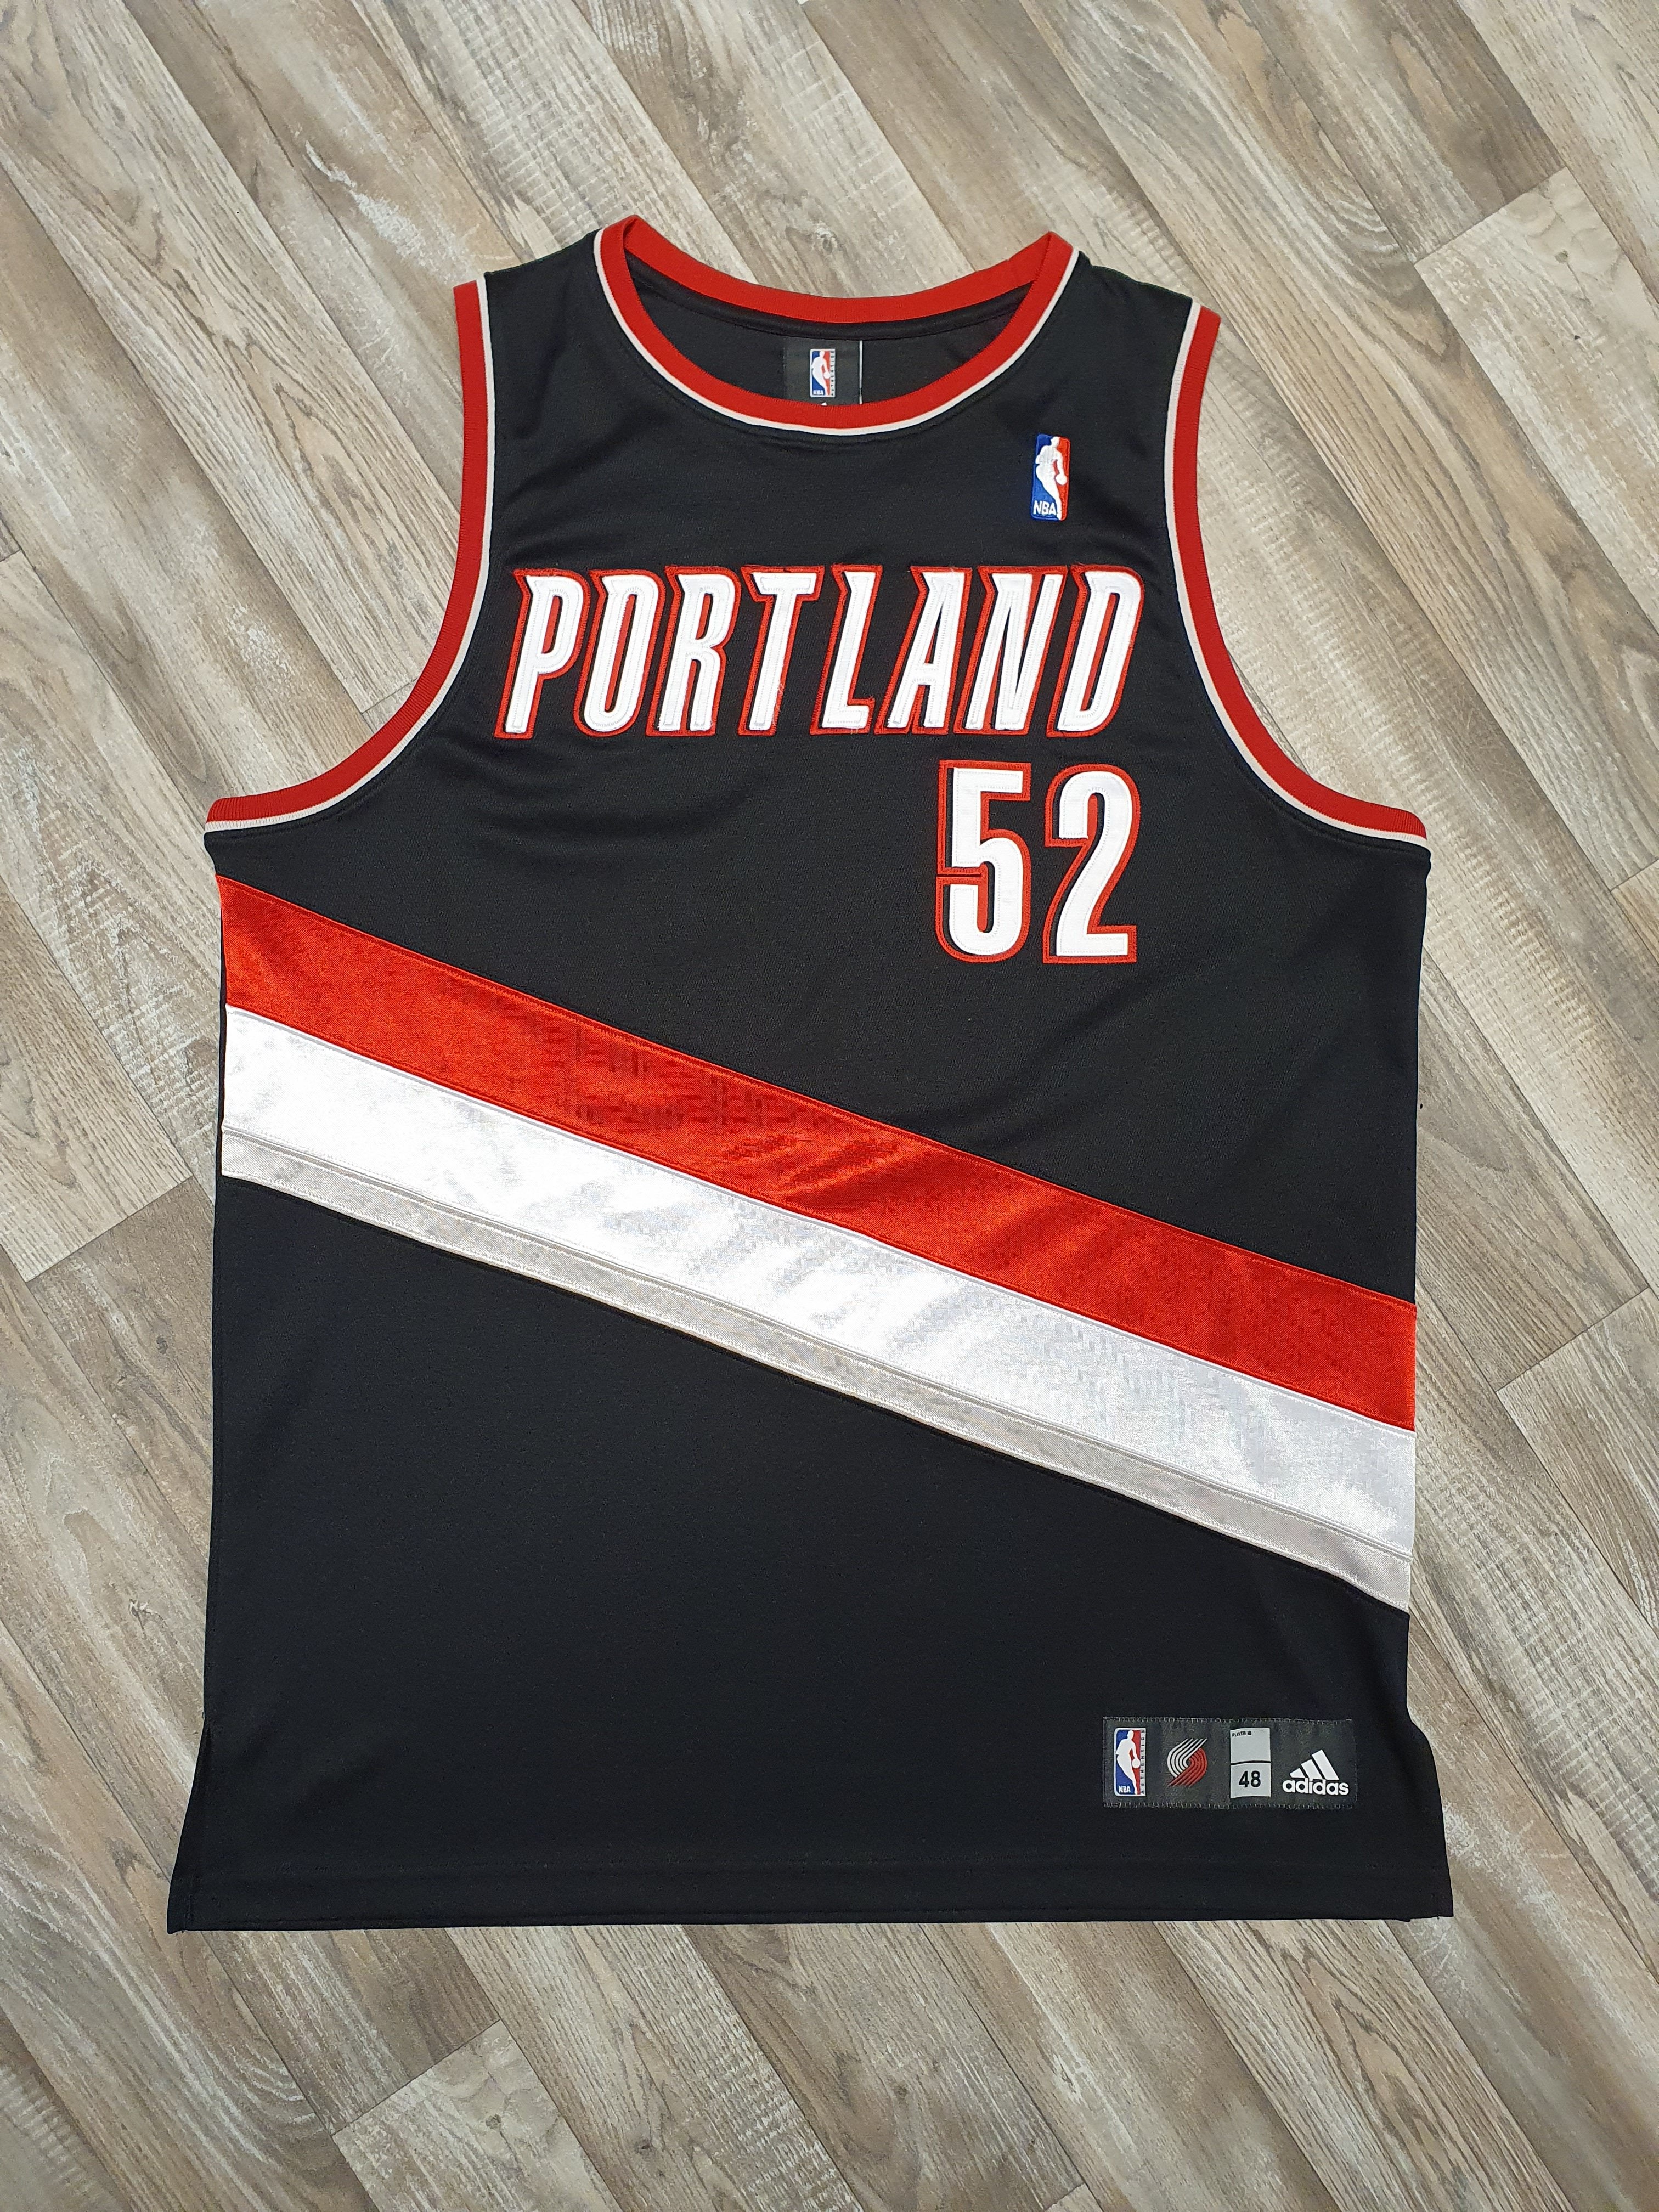 Adidas Portland Trailblazers #52 Greg Oden Vintage Basketball